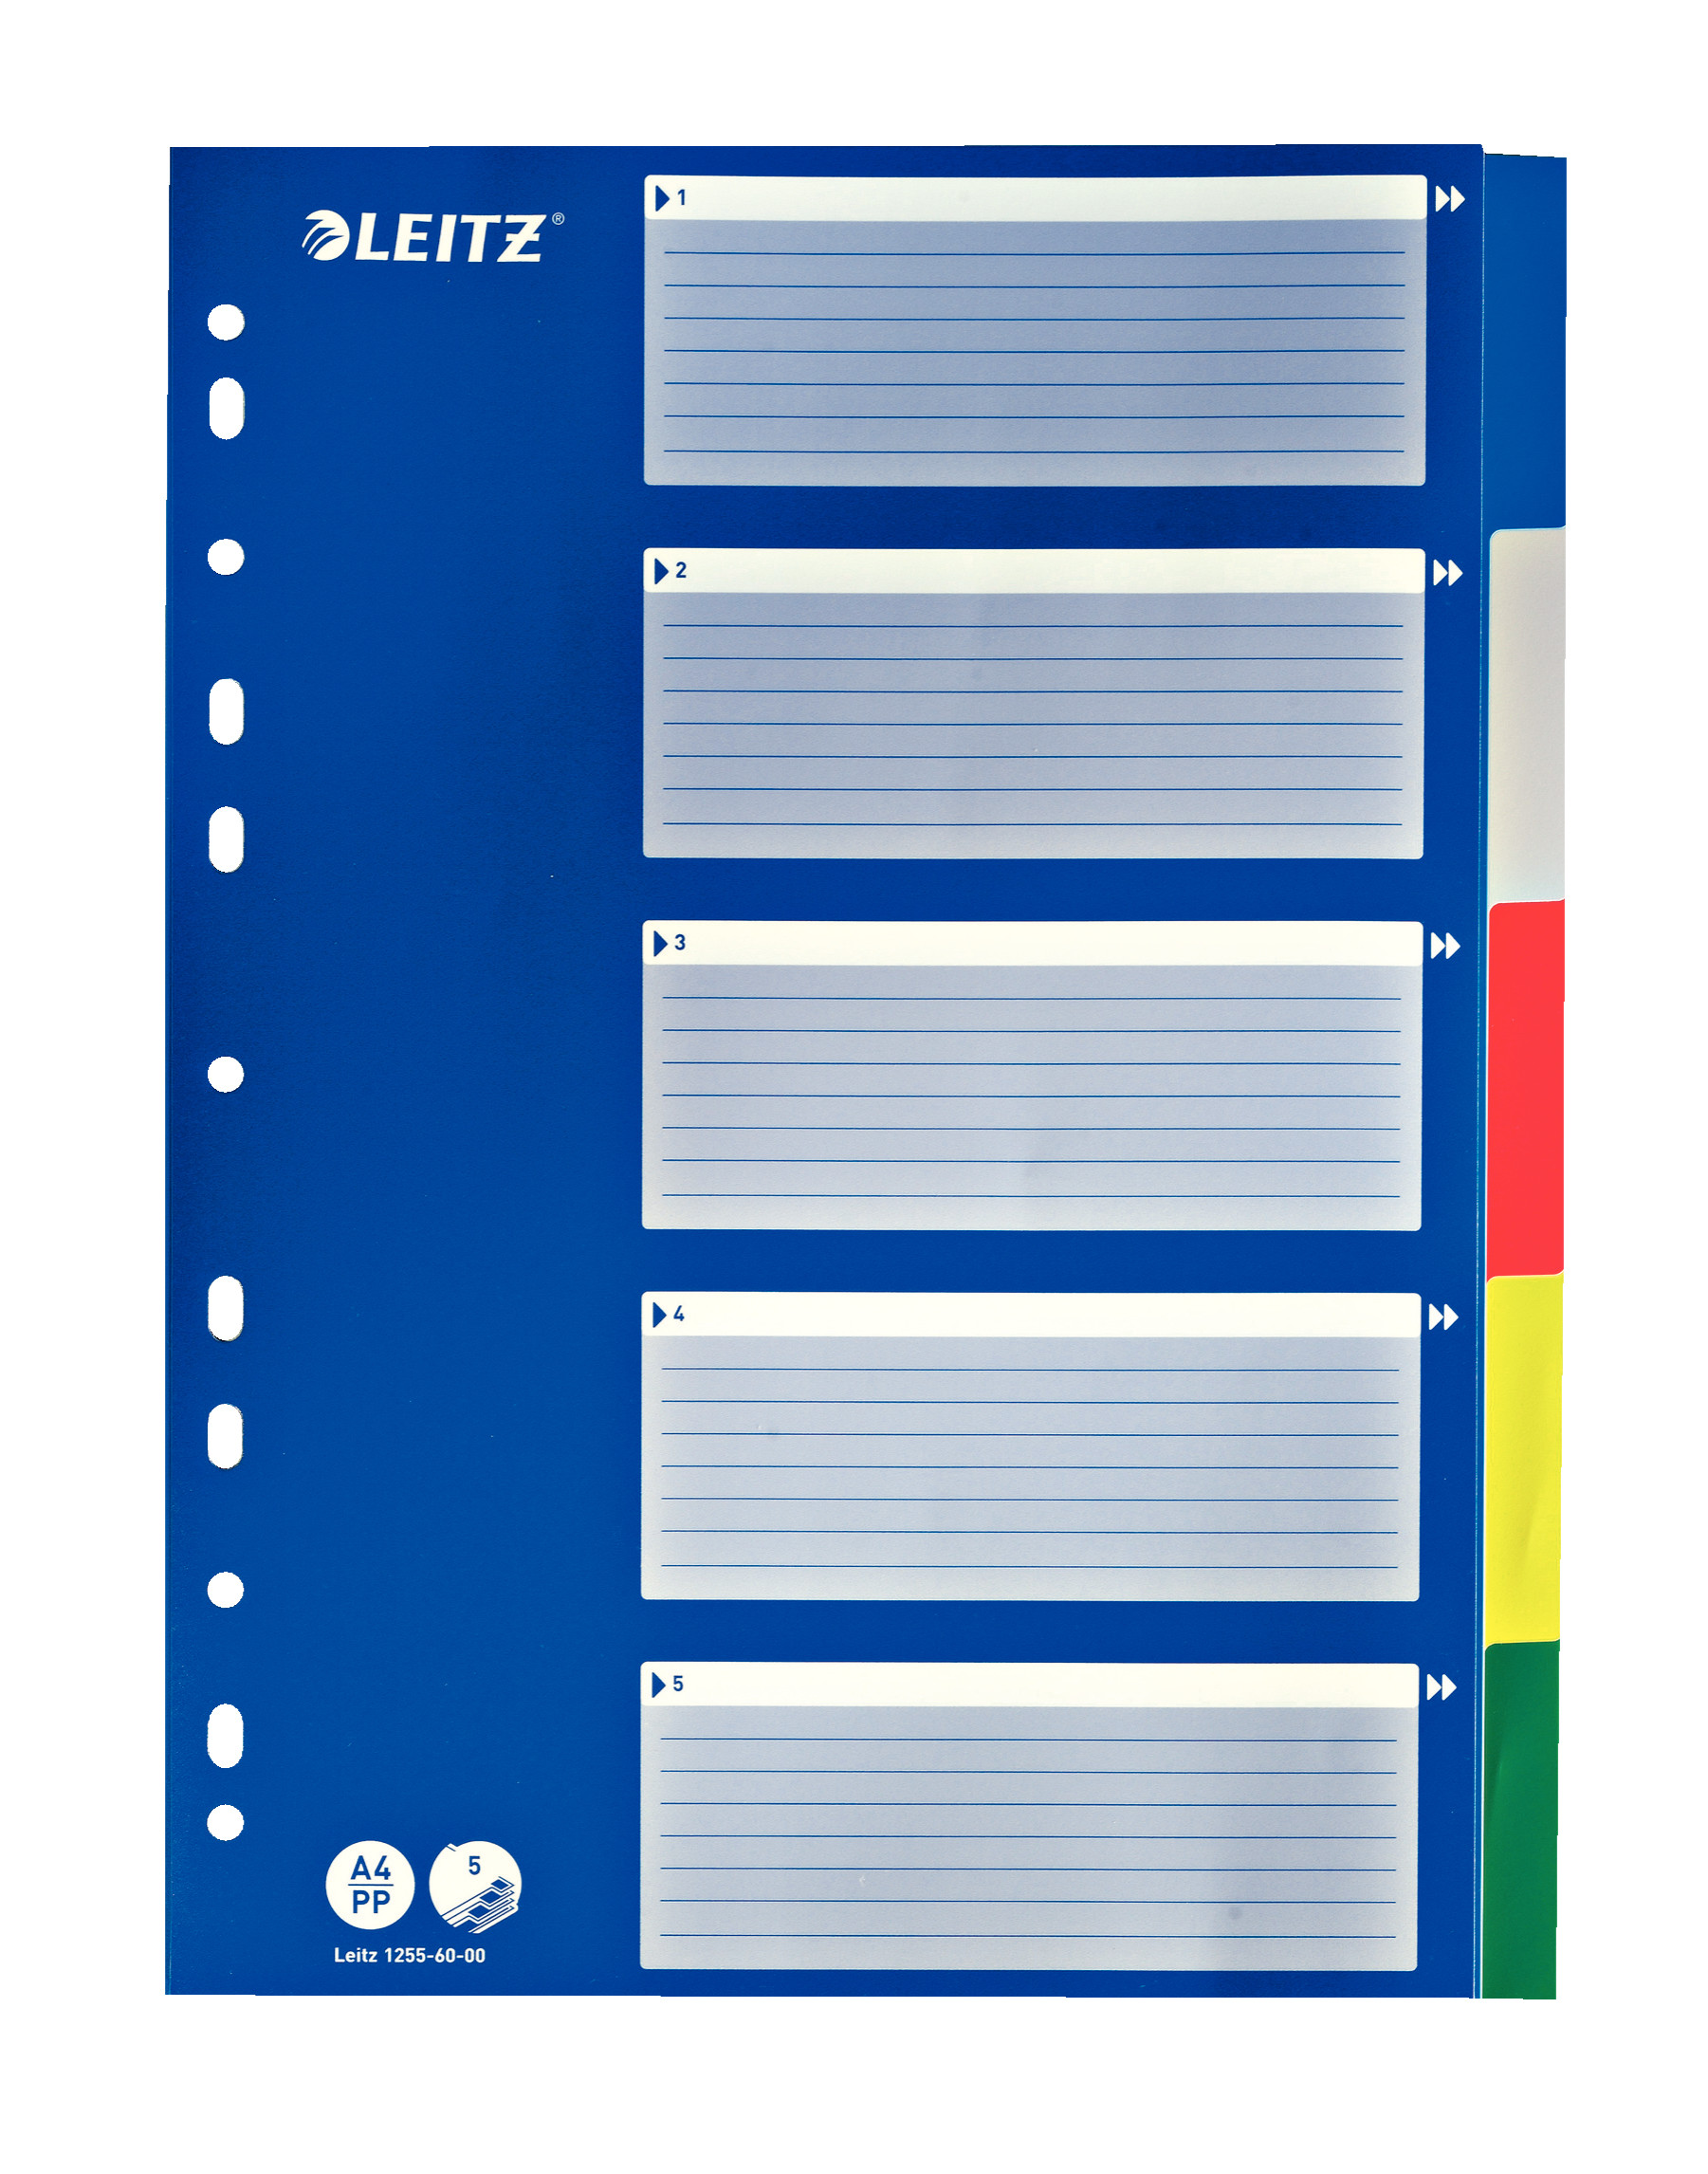 Leitz A4 5 Separadores Archivador Multicolor, Pestañas de Plástico Resistente con Carátula de Índice, 12556000